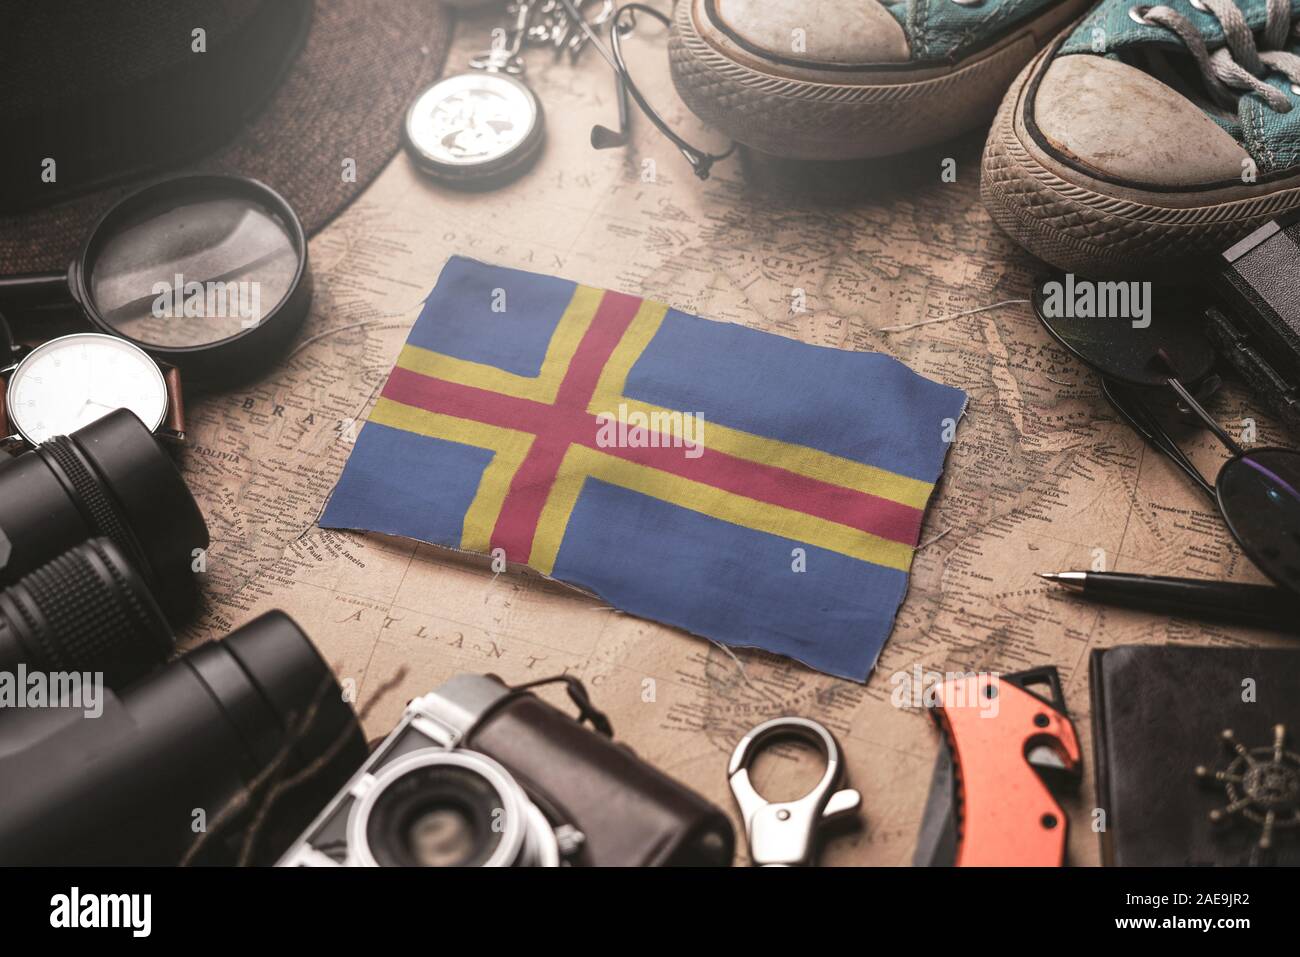 Aland Islands Flag Between Traveler's Accessories on Old Vintage Map. Tourist Destination Concept. Stock Photo